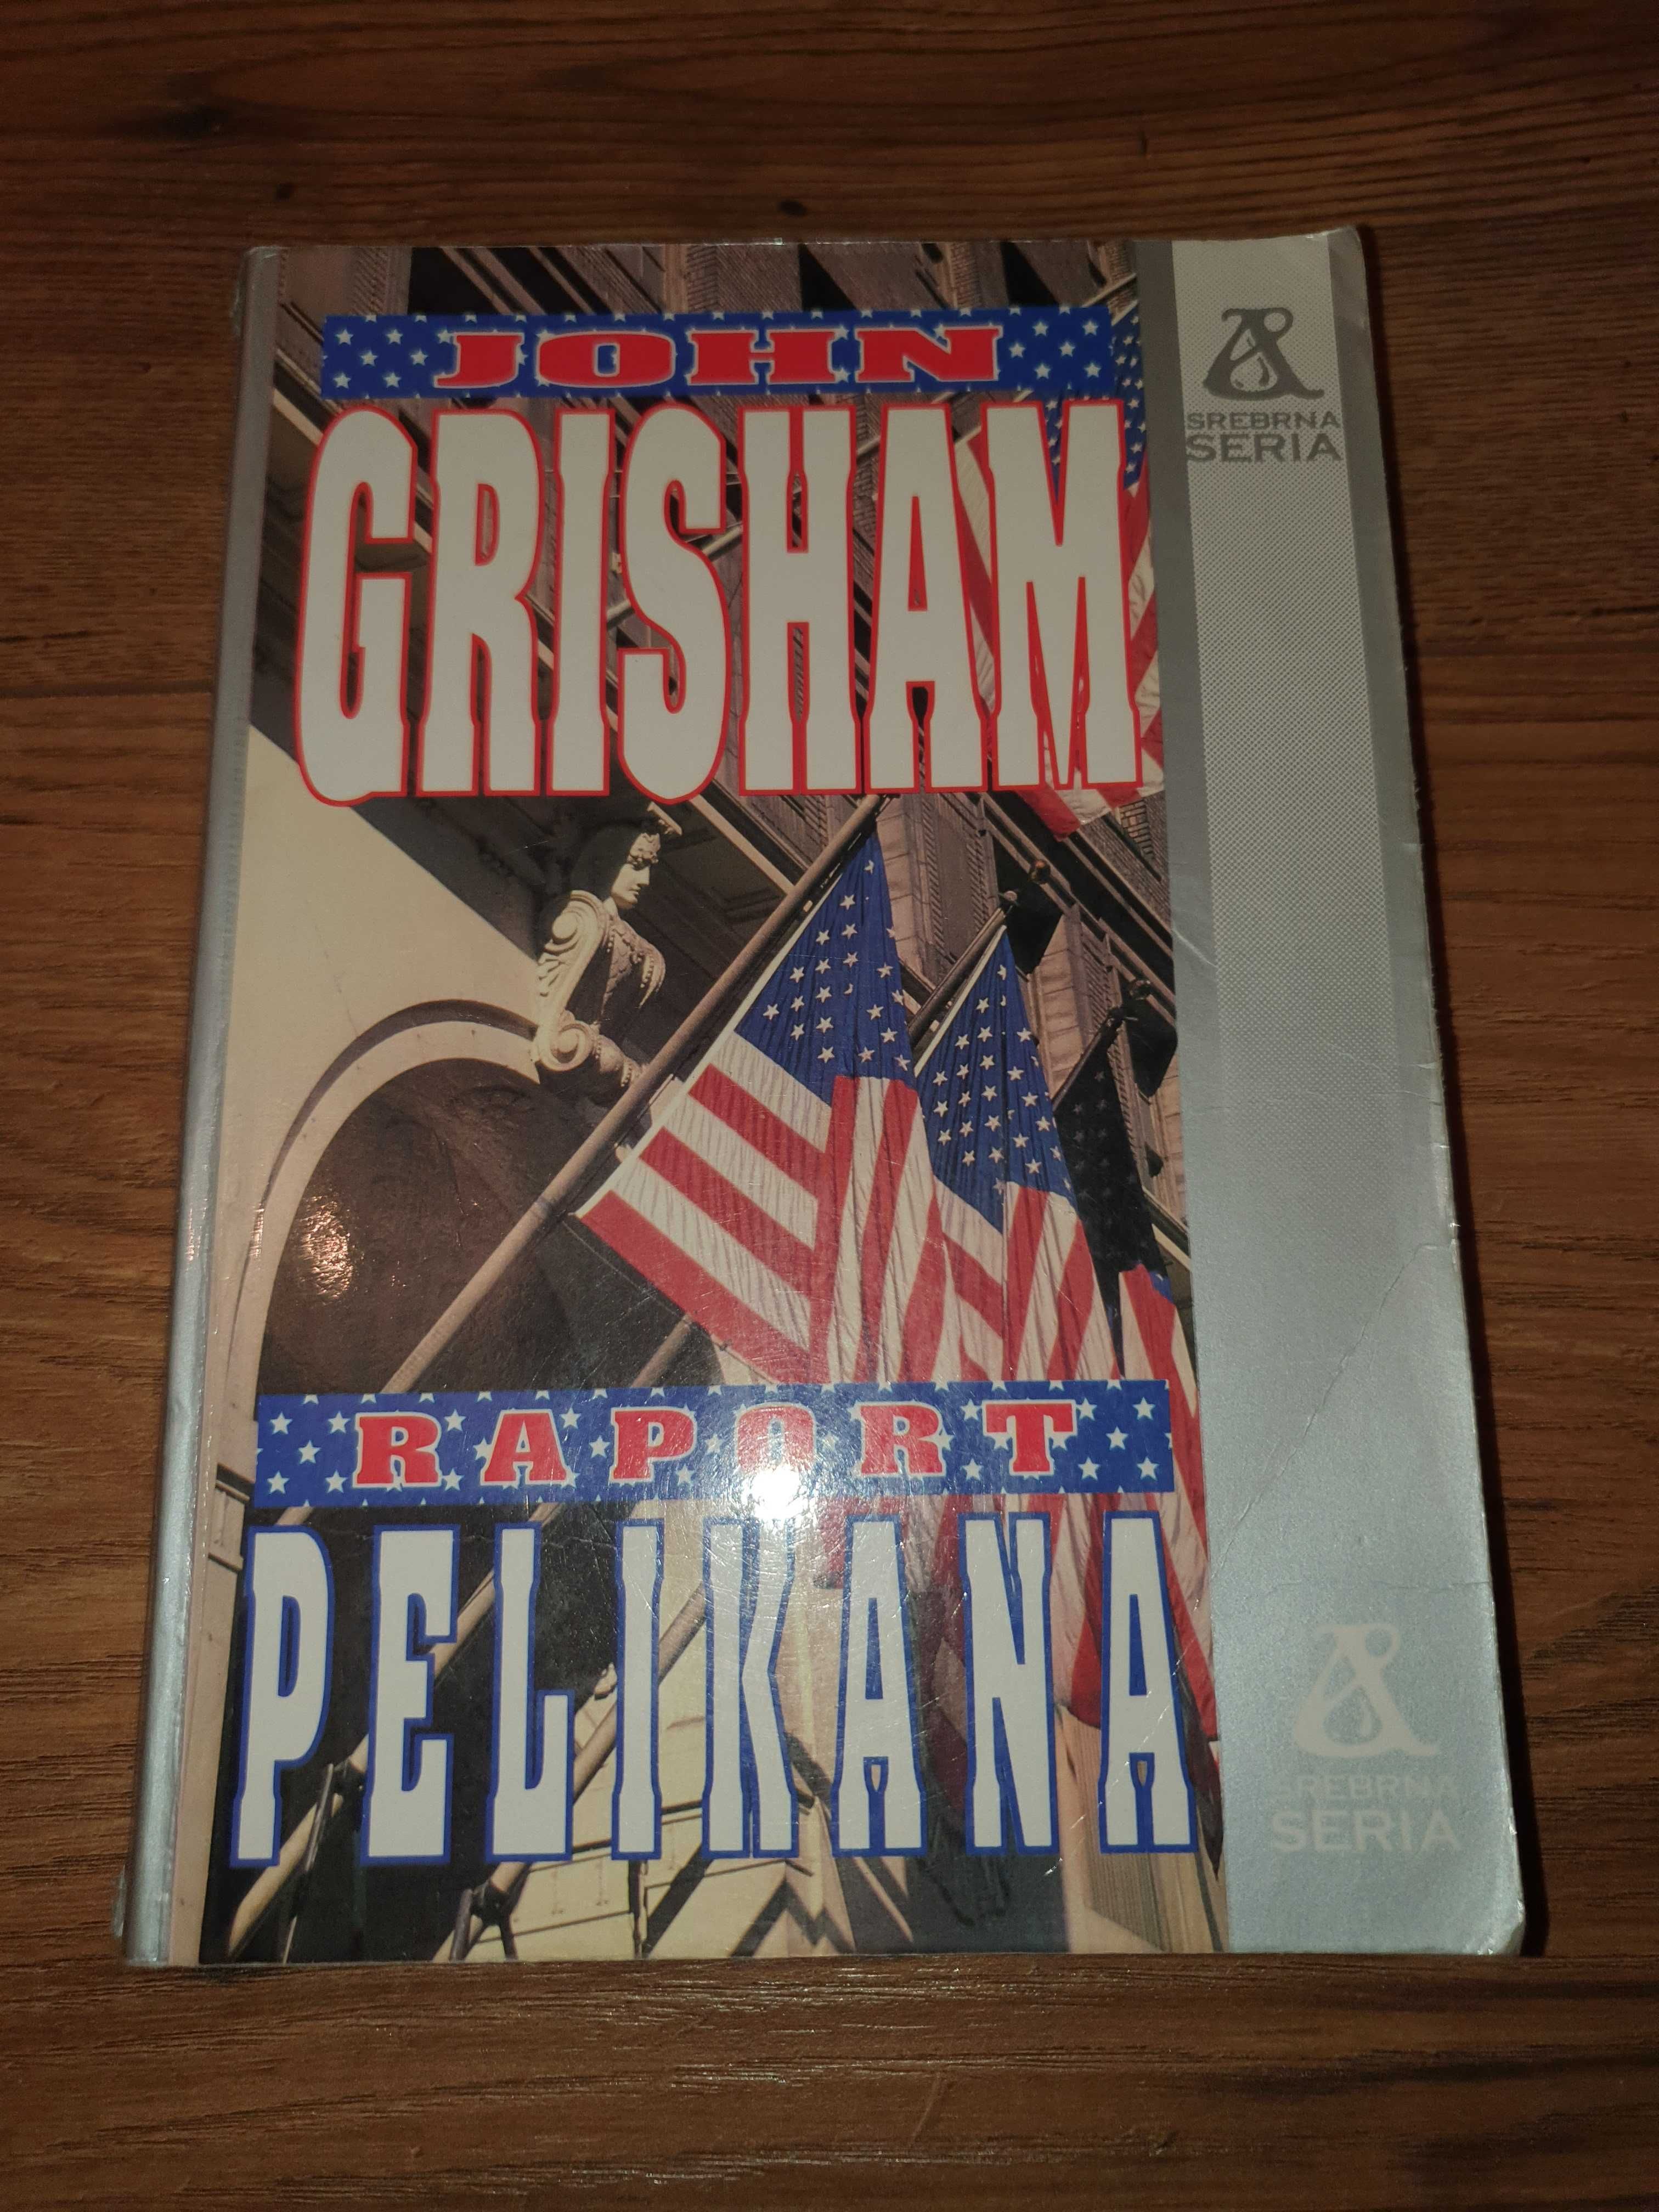 John Grisham - Raport Pelikana - polecam!